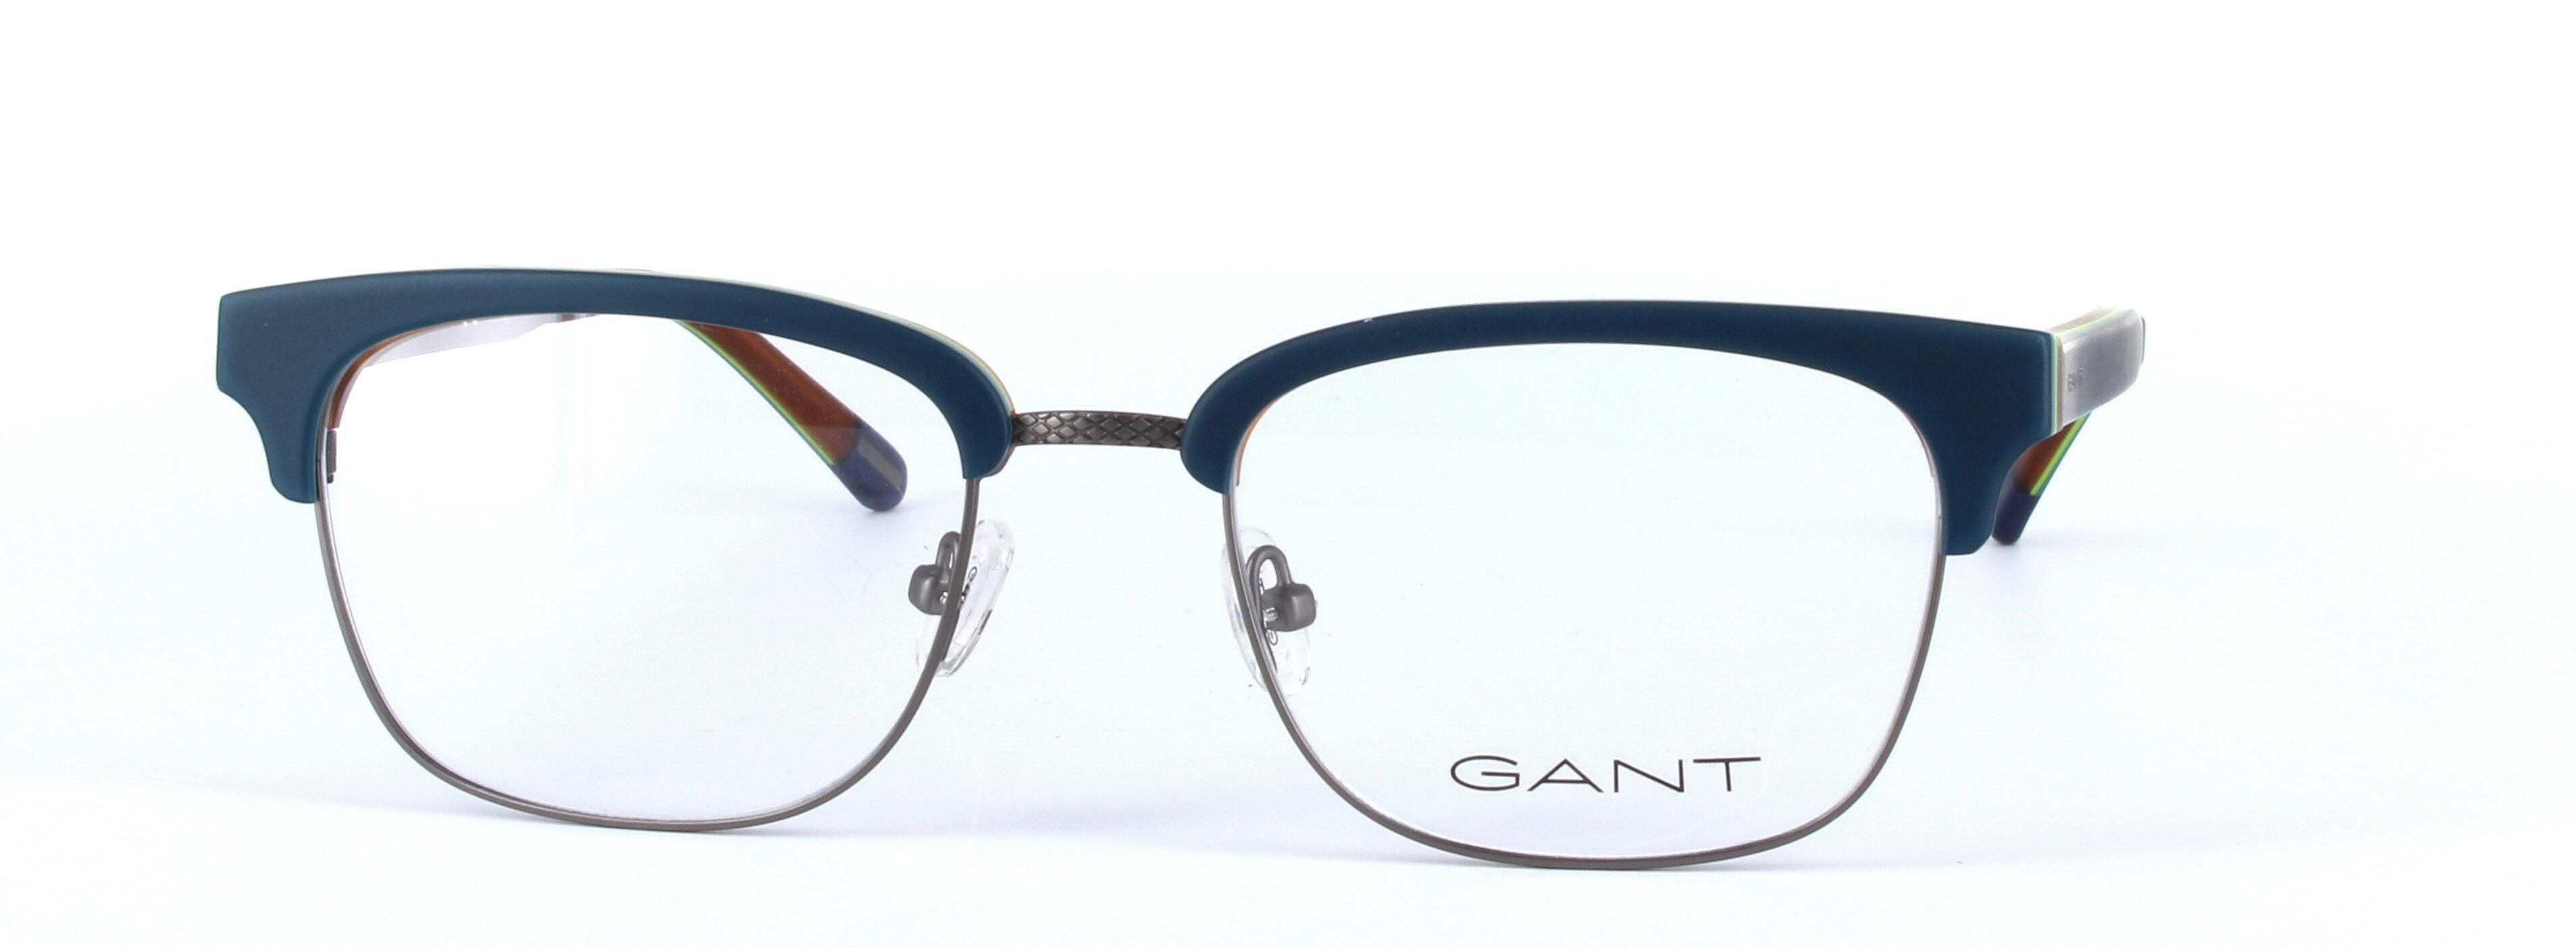 GANT (GA3141-092) Blue Full Rim Oval Acetate Glasses - Image View 5